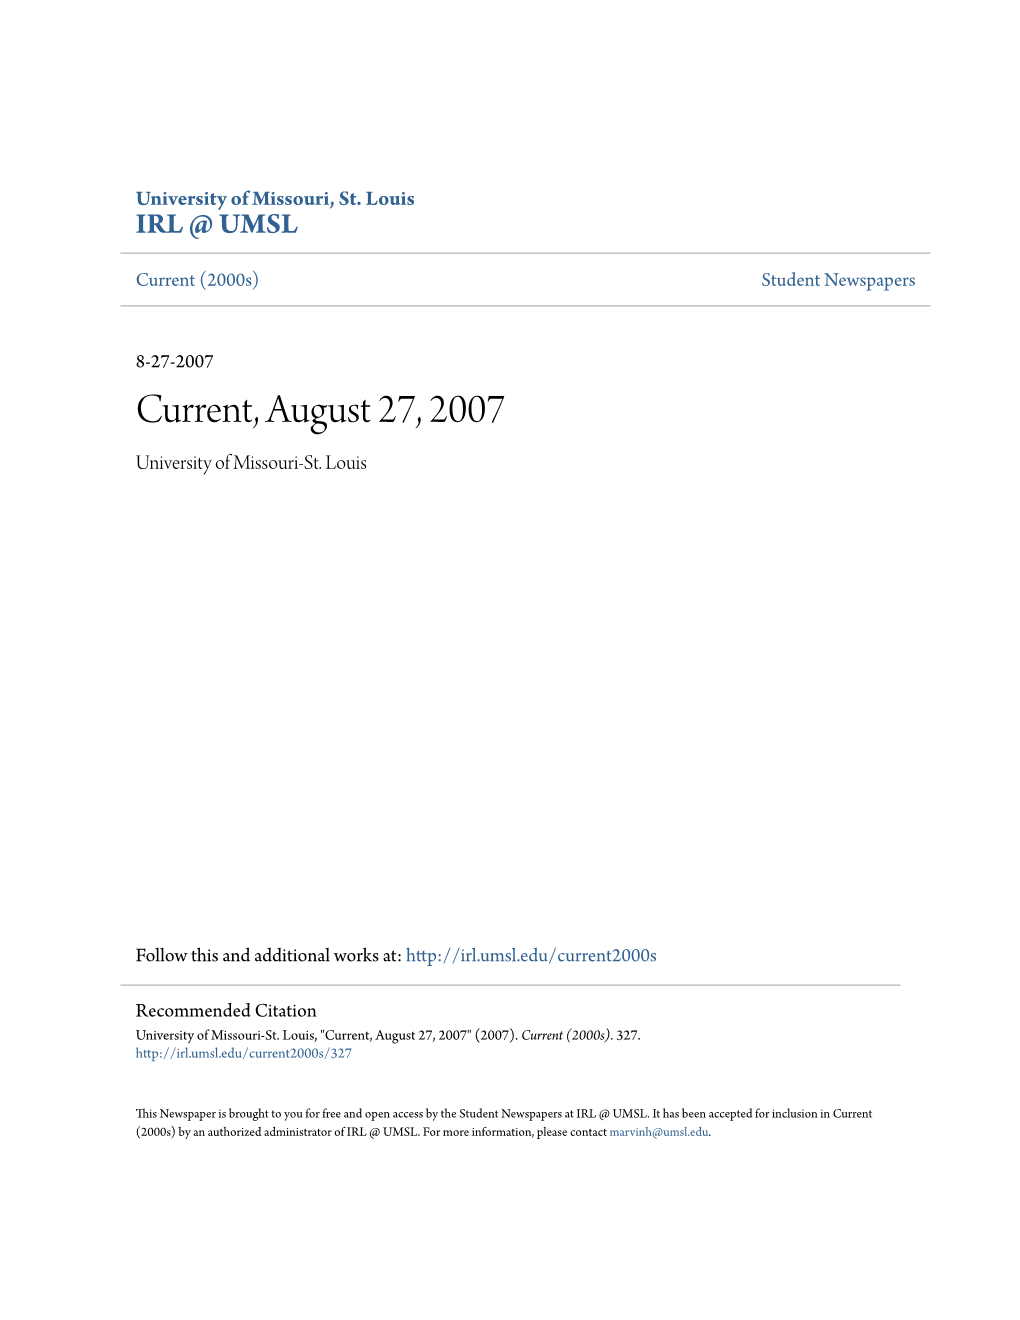 Current, August 27, 2007 University of Missouri-St